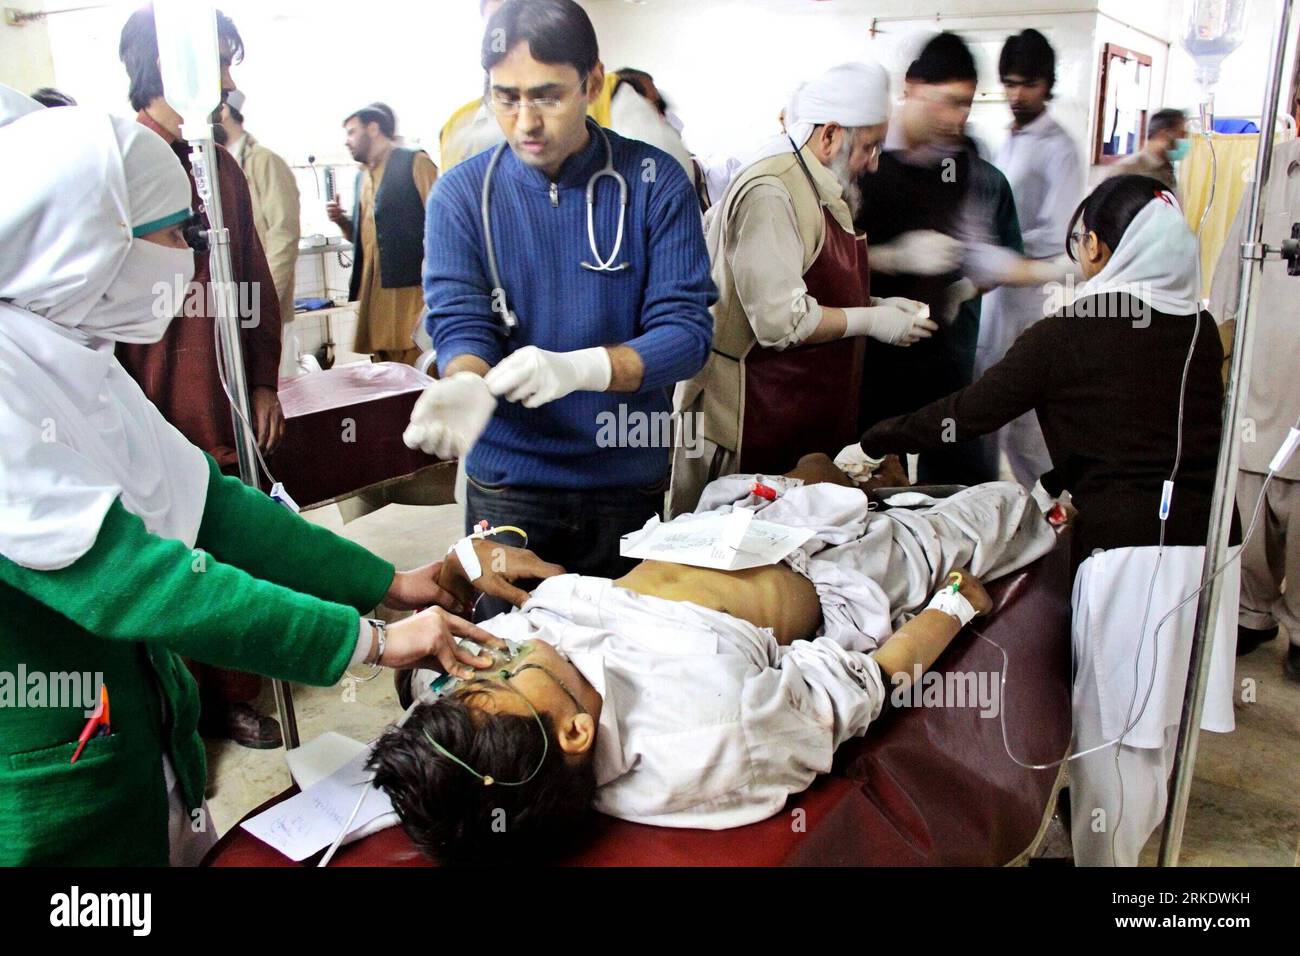 Bildnummer: 55011800  Datum: 10.03.2011  Copyright: imago/Xinhua DERA MURAD JAMALI, March 10, 2011 (Xinhua) -- An injured person receives medical treatment at a hospital in southwest Pakistan s Dera Murad Jamali, on March 10, 2011. At least one was killed and 14 others injured in a blast that occurred Thursday afternoon in Pakistan s southwest province of Balochistan, reported local Urdu TV channel Geo. (Xinhua/Iqbal Hussain) (lr) PAKISTAN-DERA MURAD JAMALI-BLAST PUBLICATIONxNOTxINxCHN Gesellschaft Anschlag Explosion premiumd kbdig xkg 2011 quer o0 Opfer verletzt    Bildnummer 55011800 Date 10 Stock Photo